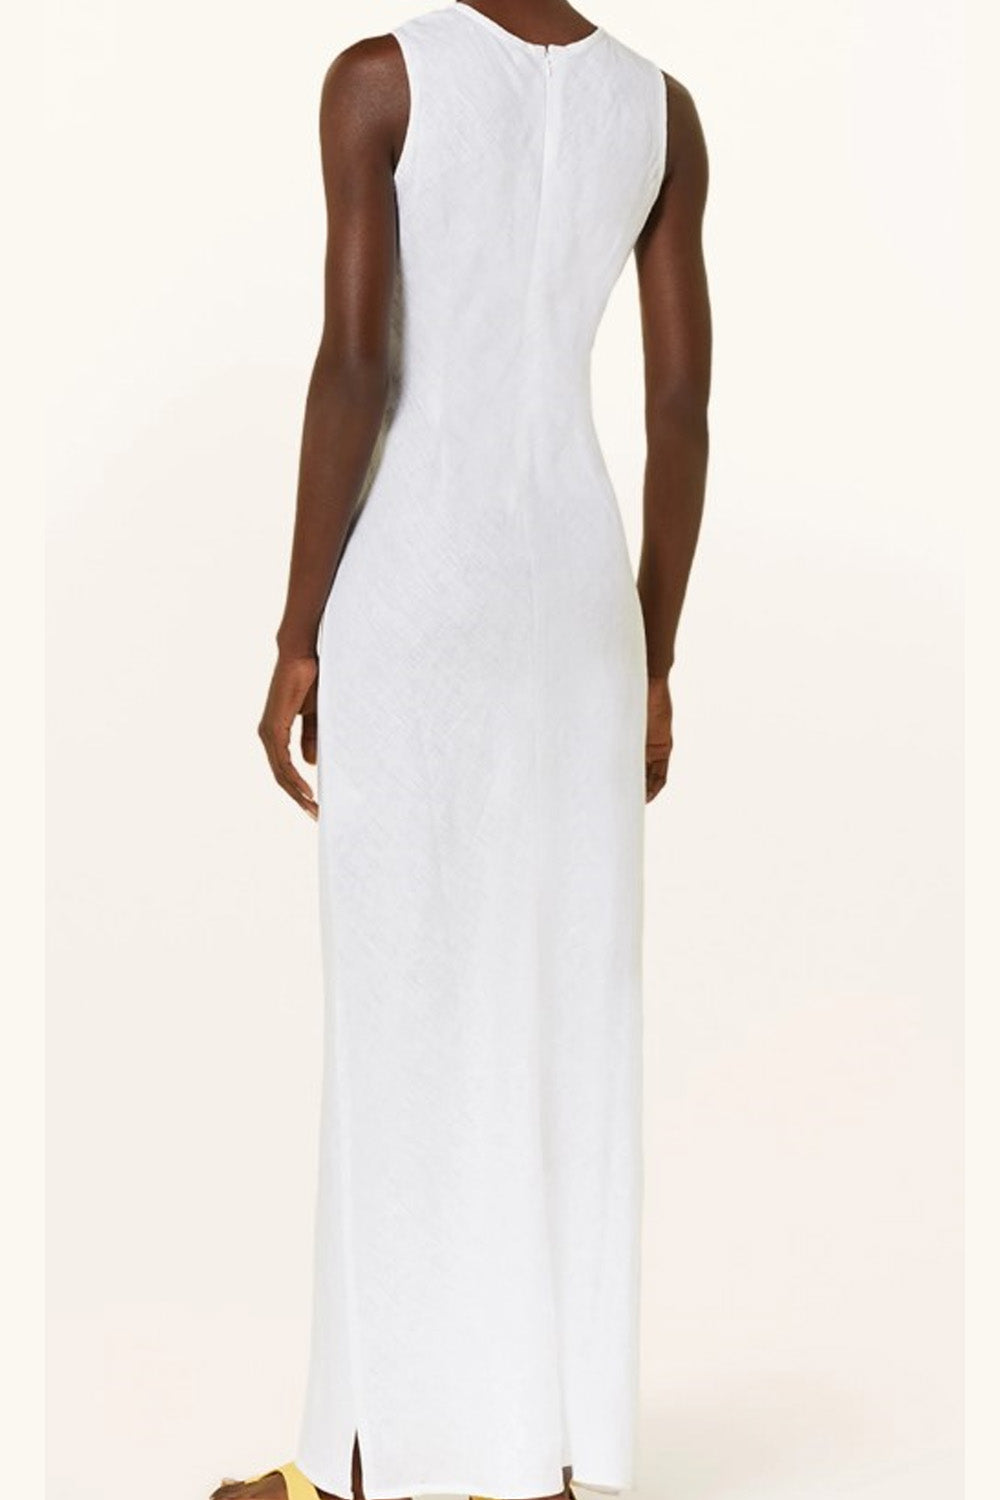 Elegance White Dress